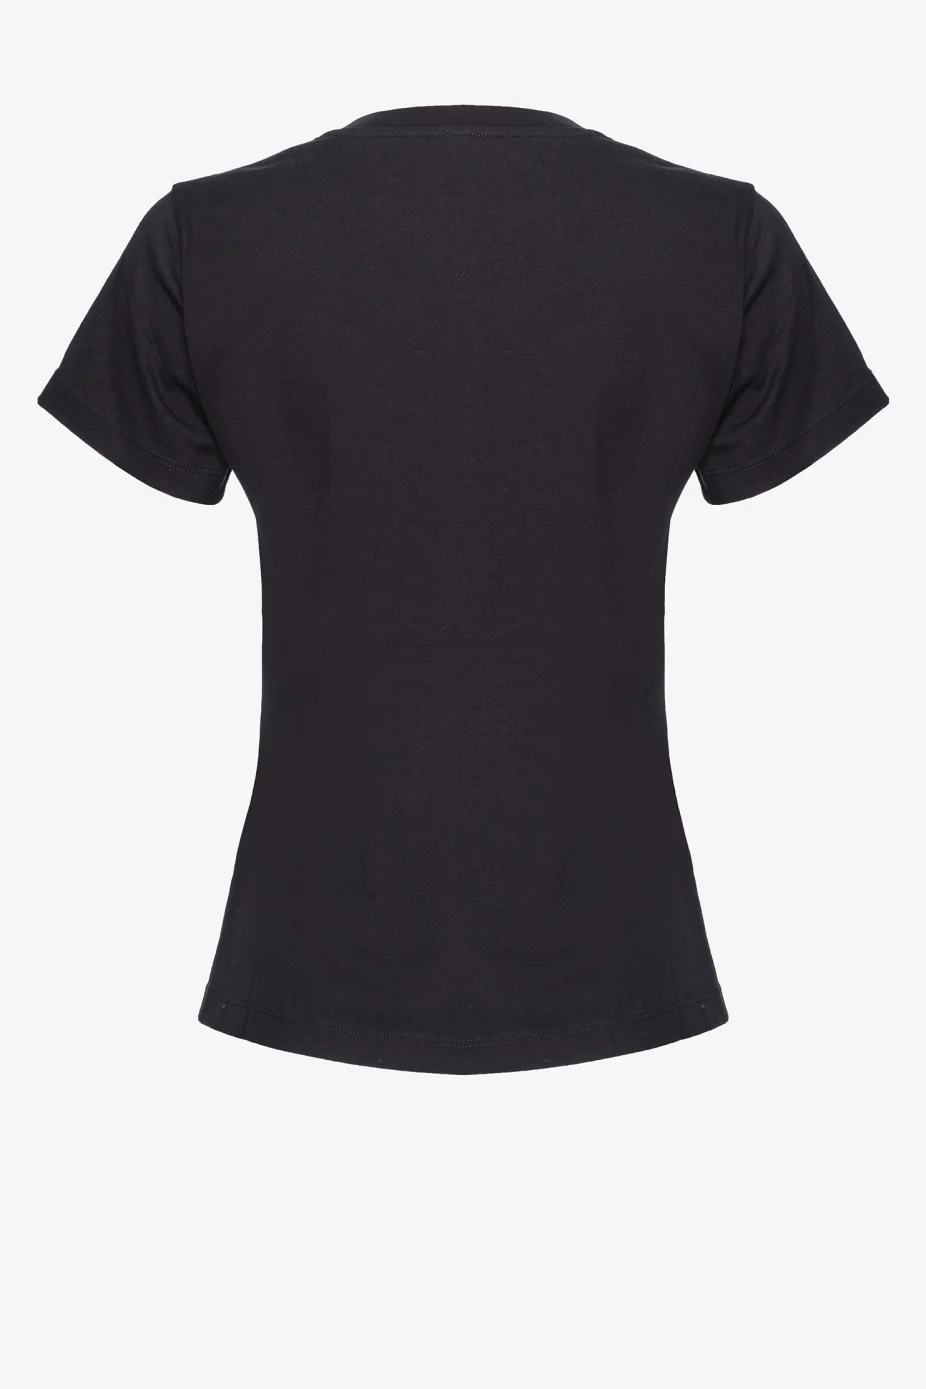 T-Shirt con Ricamo Pinko / Nero - Ideal Moda